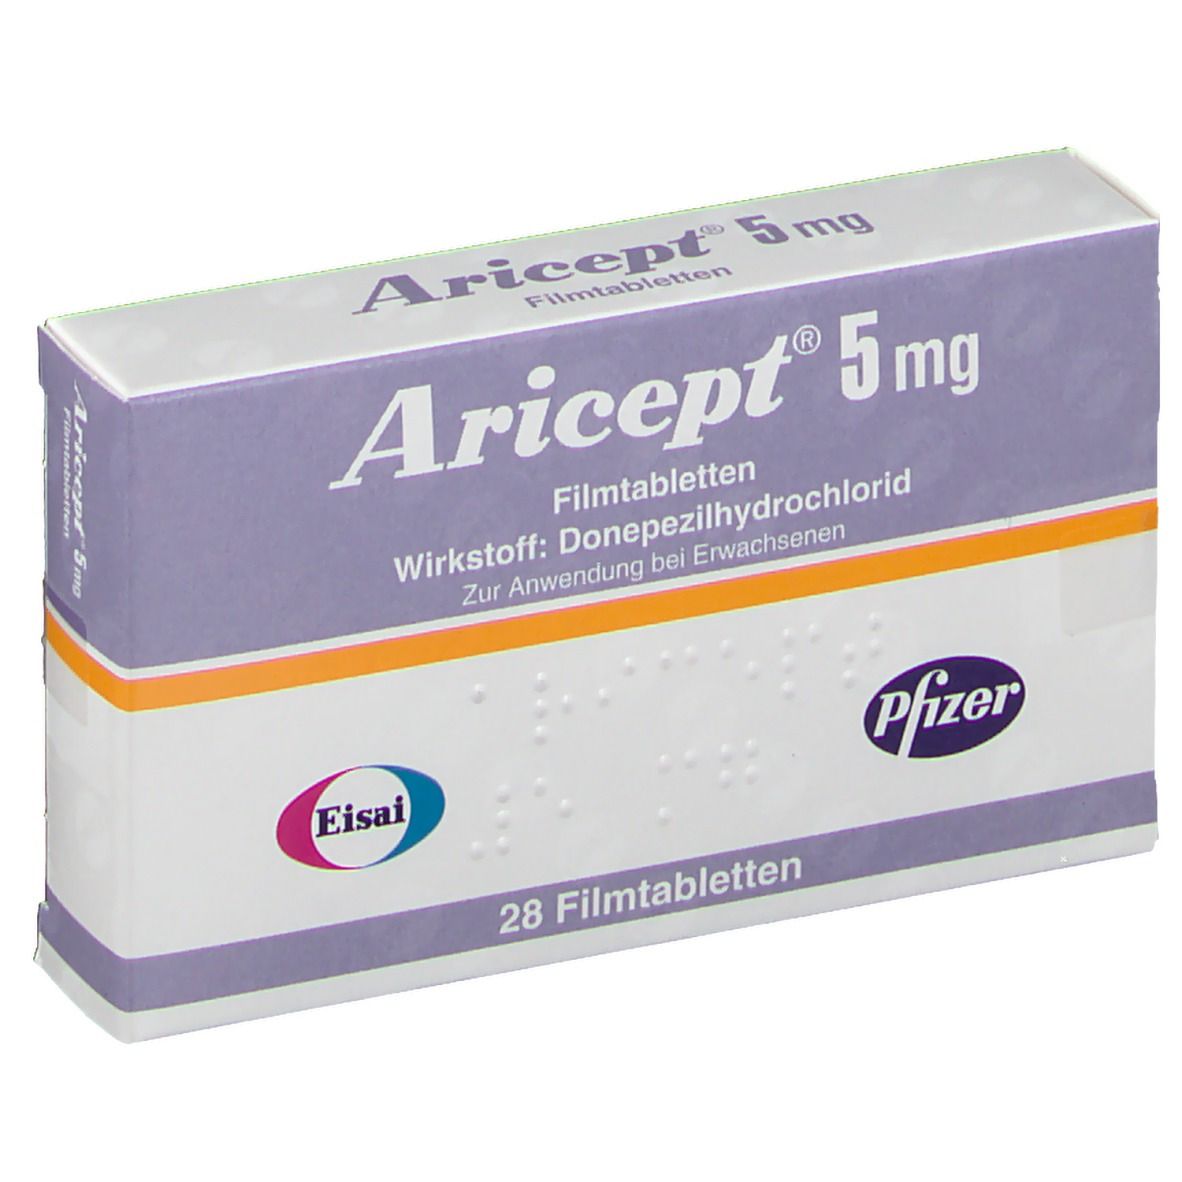 Aricept® 5 mg